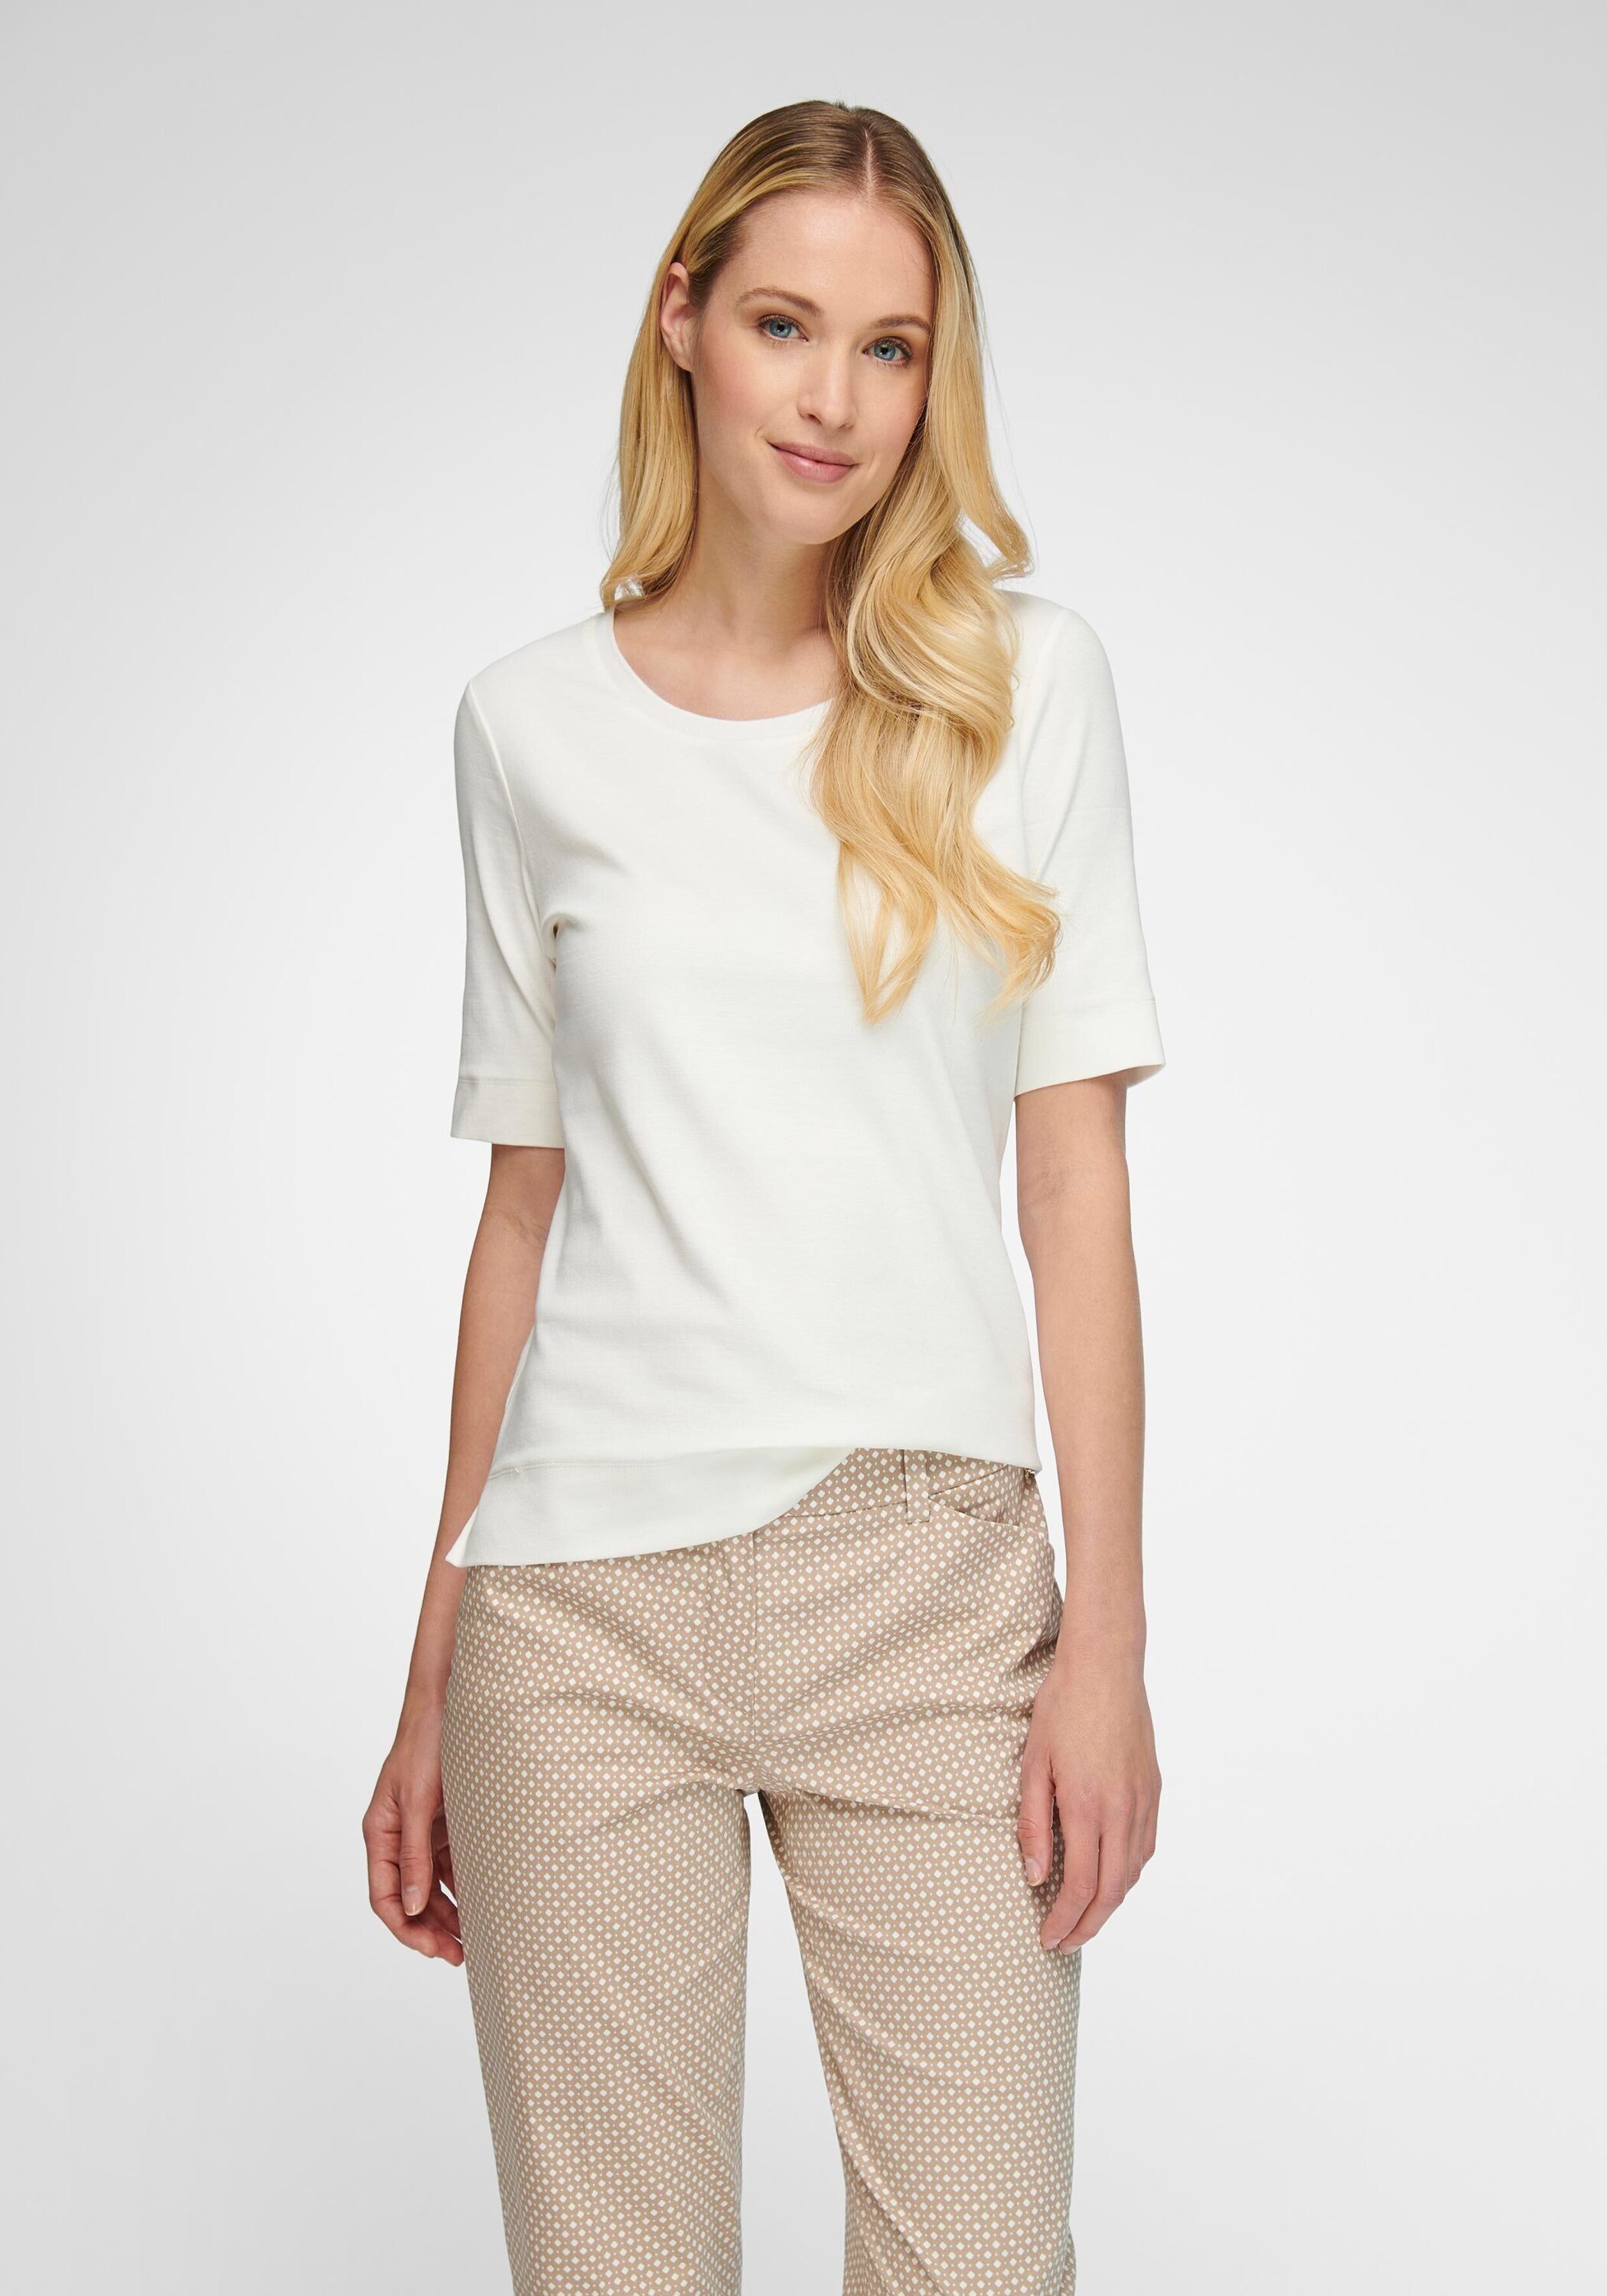 Longshirt offwhite cotton Basler